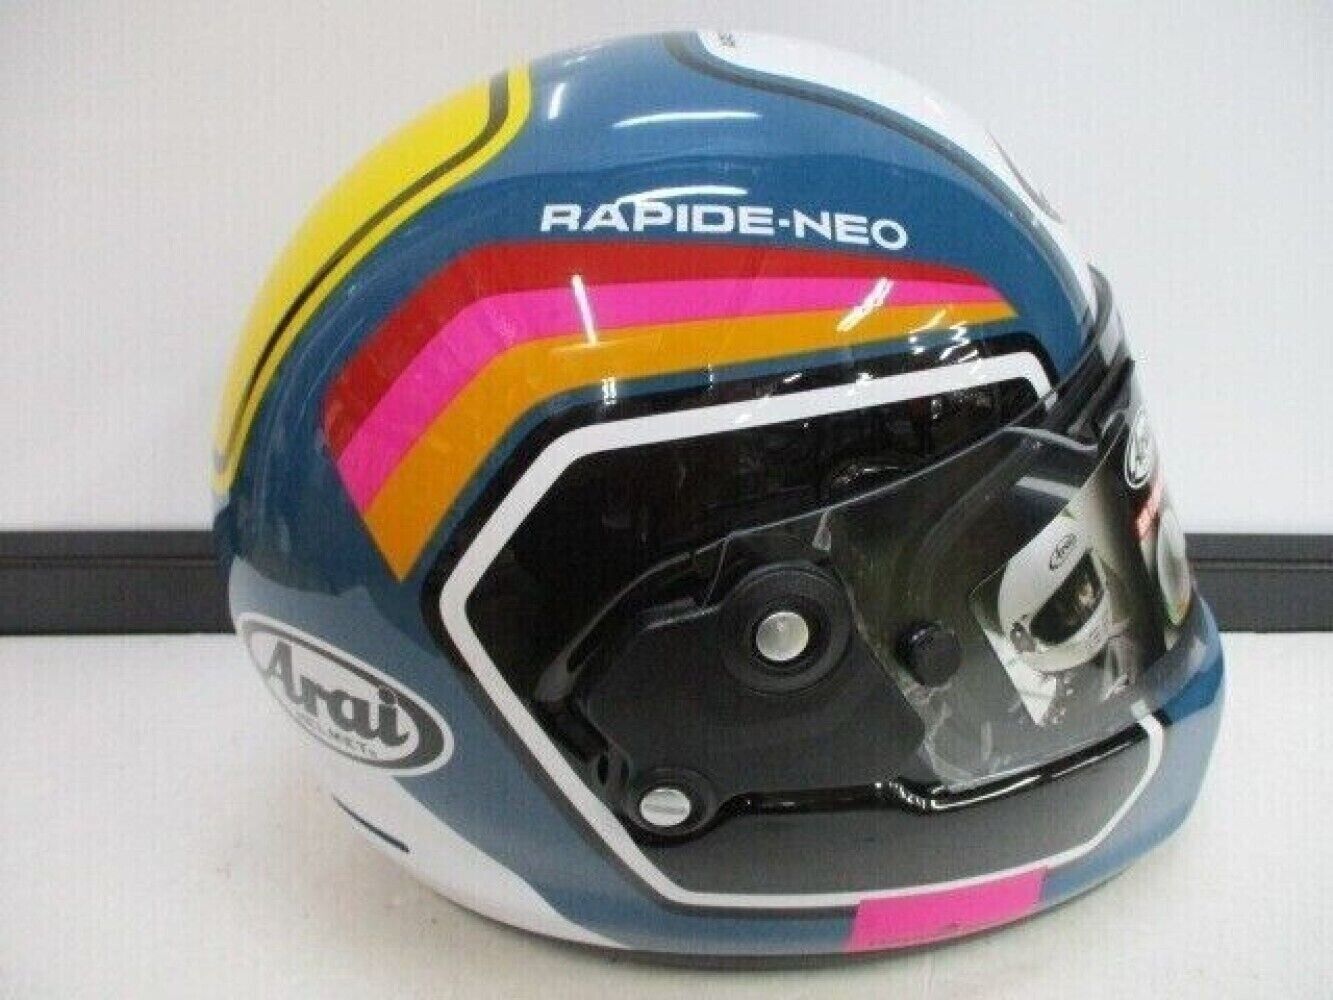 Arai Full Face Helmet Concept-x RAPIDE NEO BLUE Size: M (22.4-22.8 inch) New